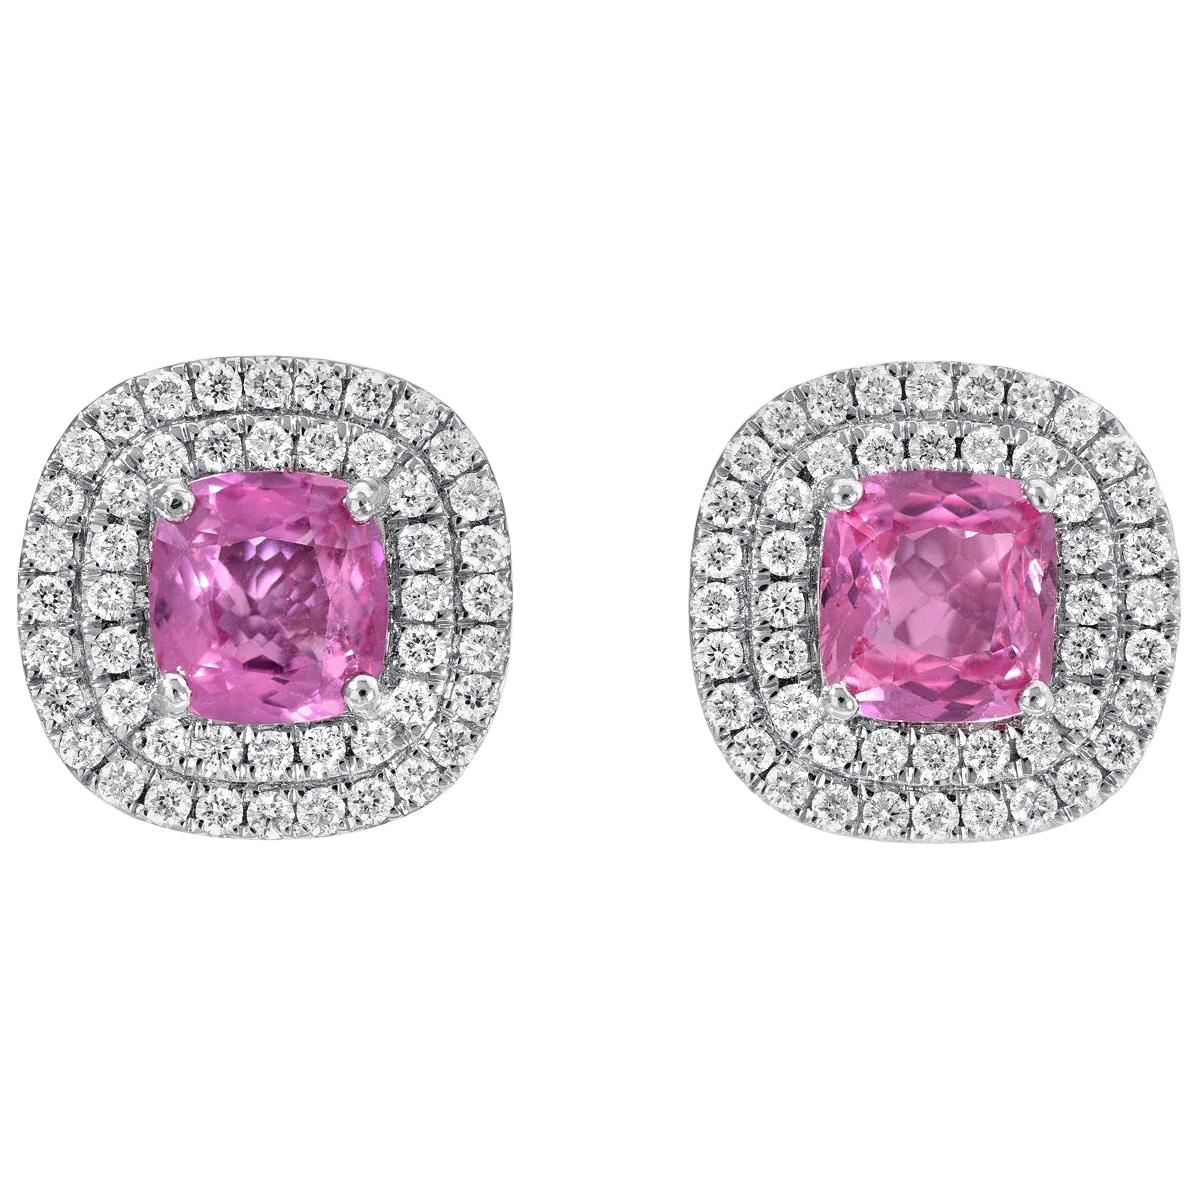 Pink Sapphire Diamond Stud Earrings 3.31 Carat Cushion Cuts